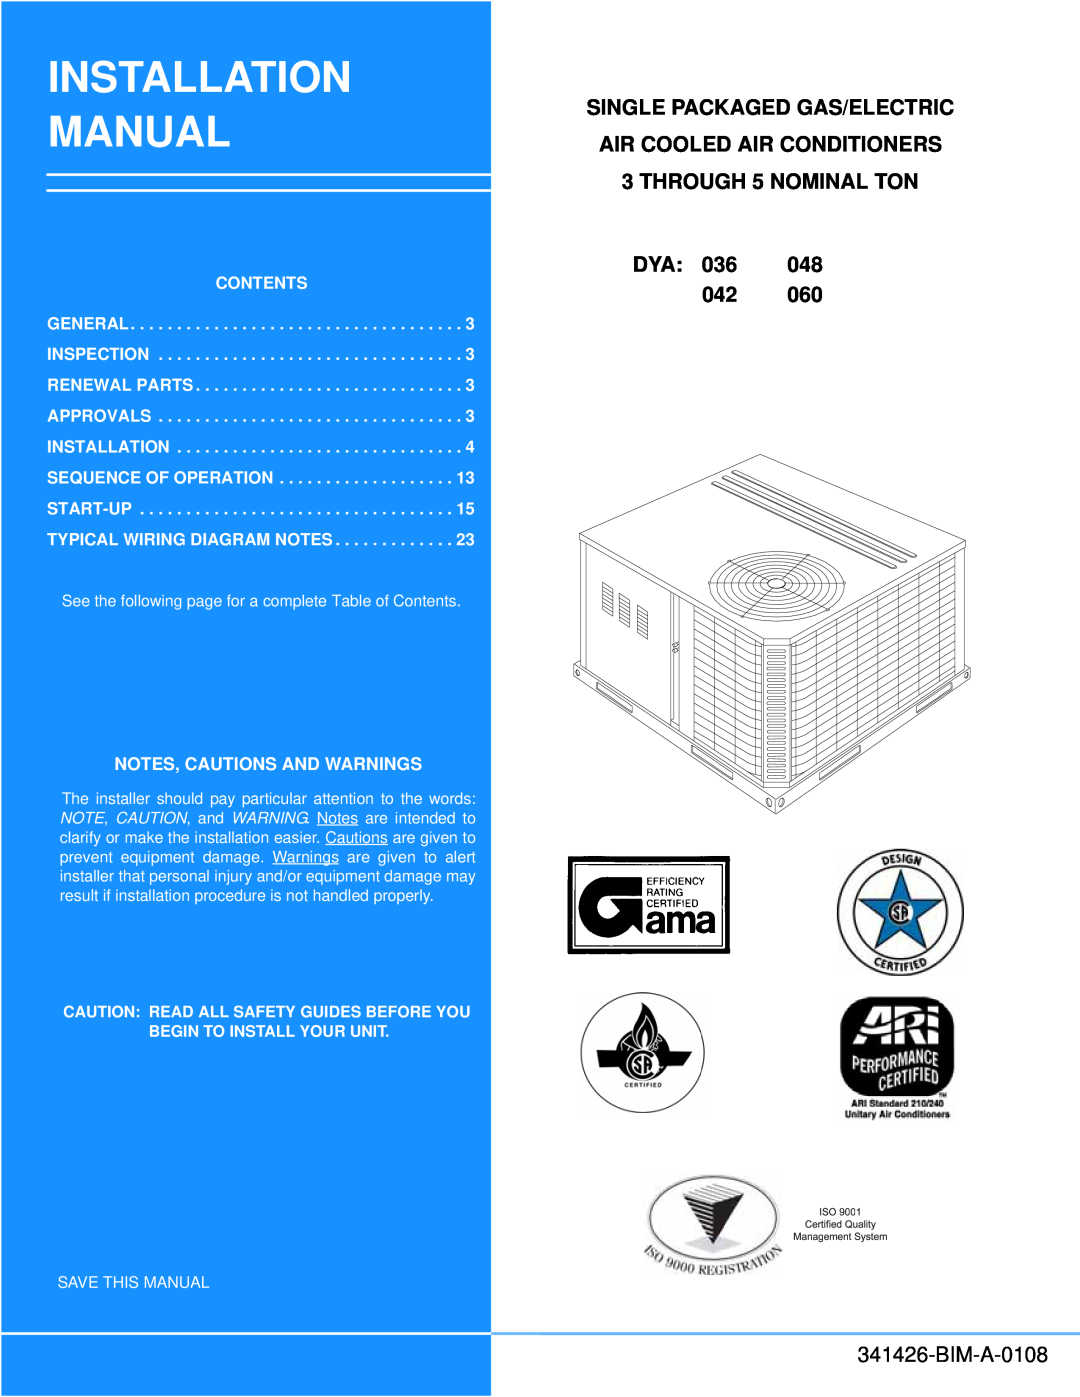 Johnson Controls 341426-BIM-A-0108 installation manual Installation Manual, Dya, Contents, Notes, Cautions And Warnings 